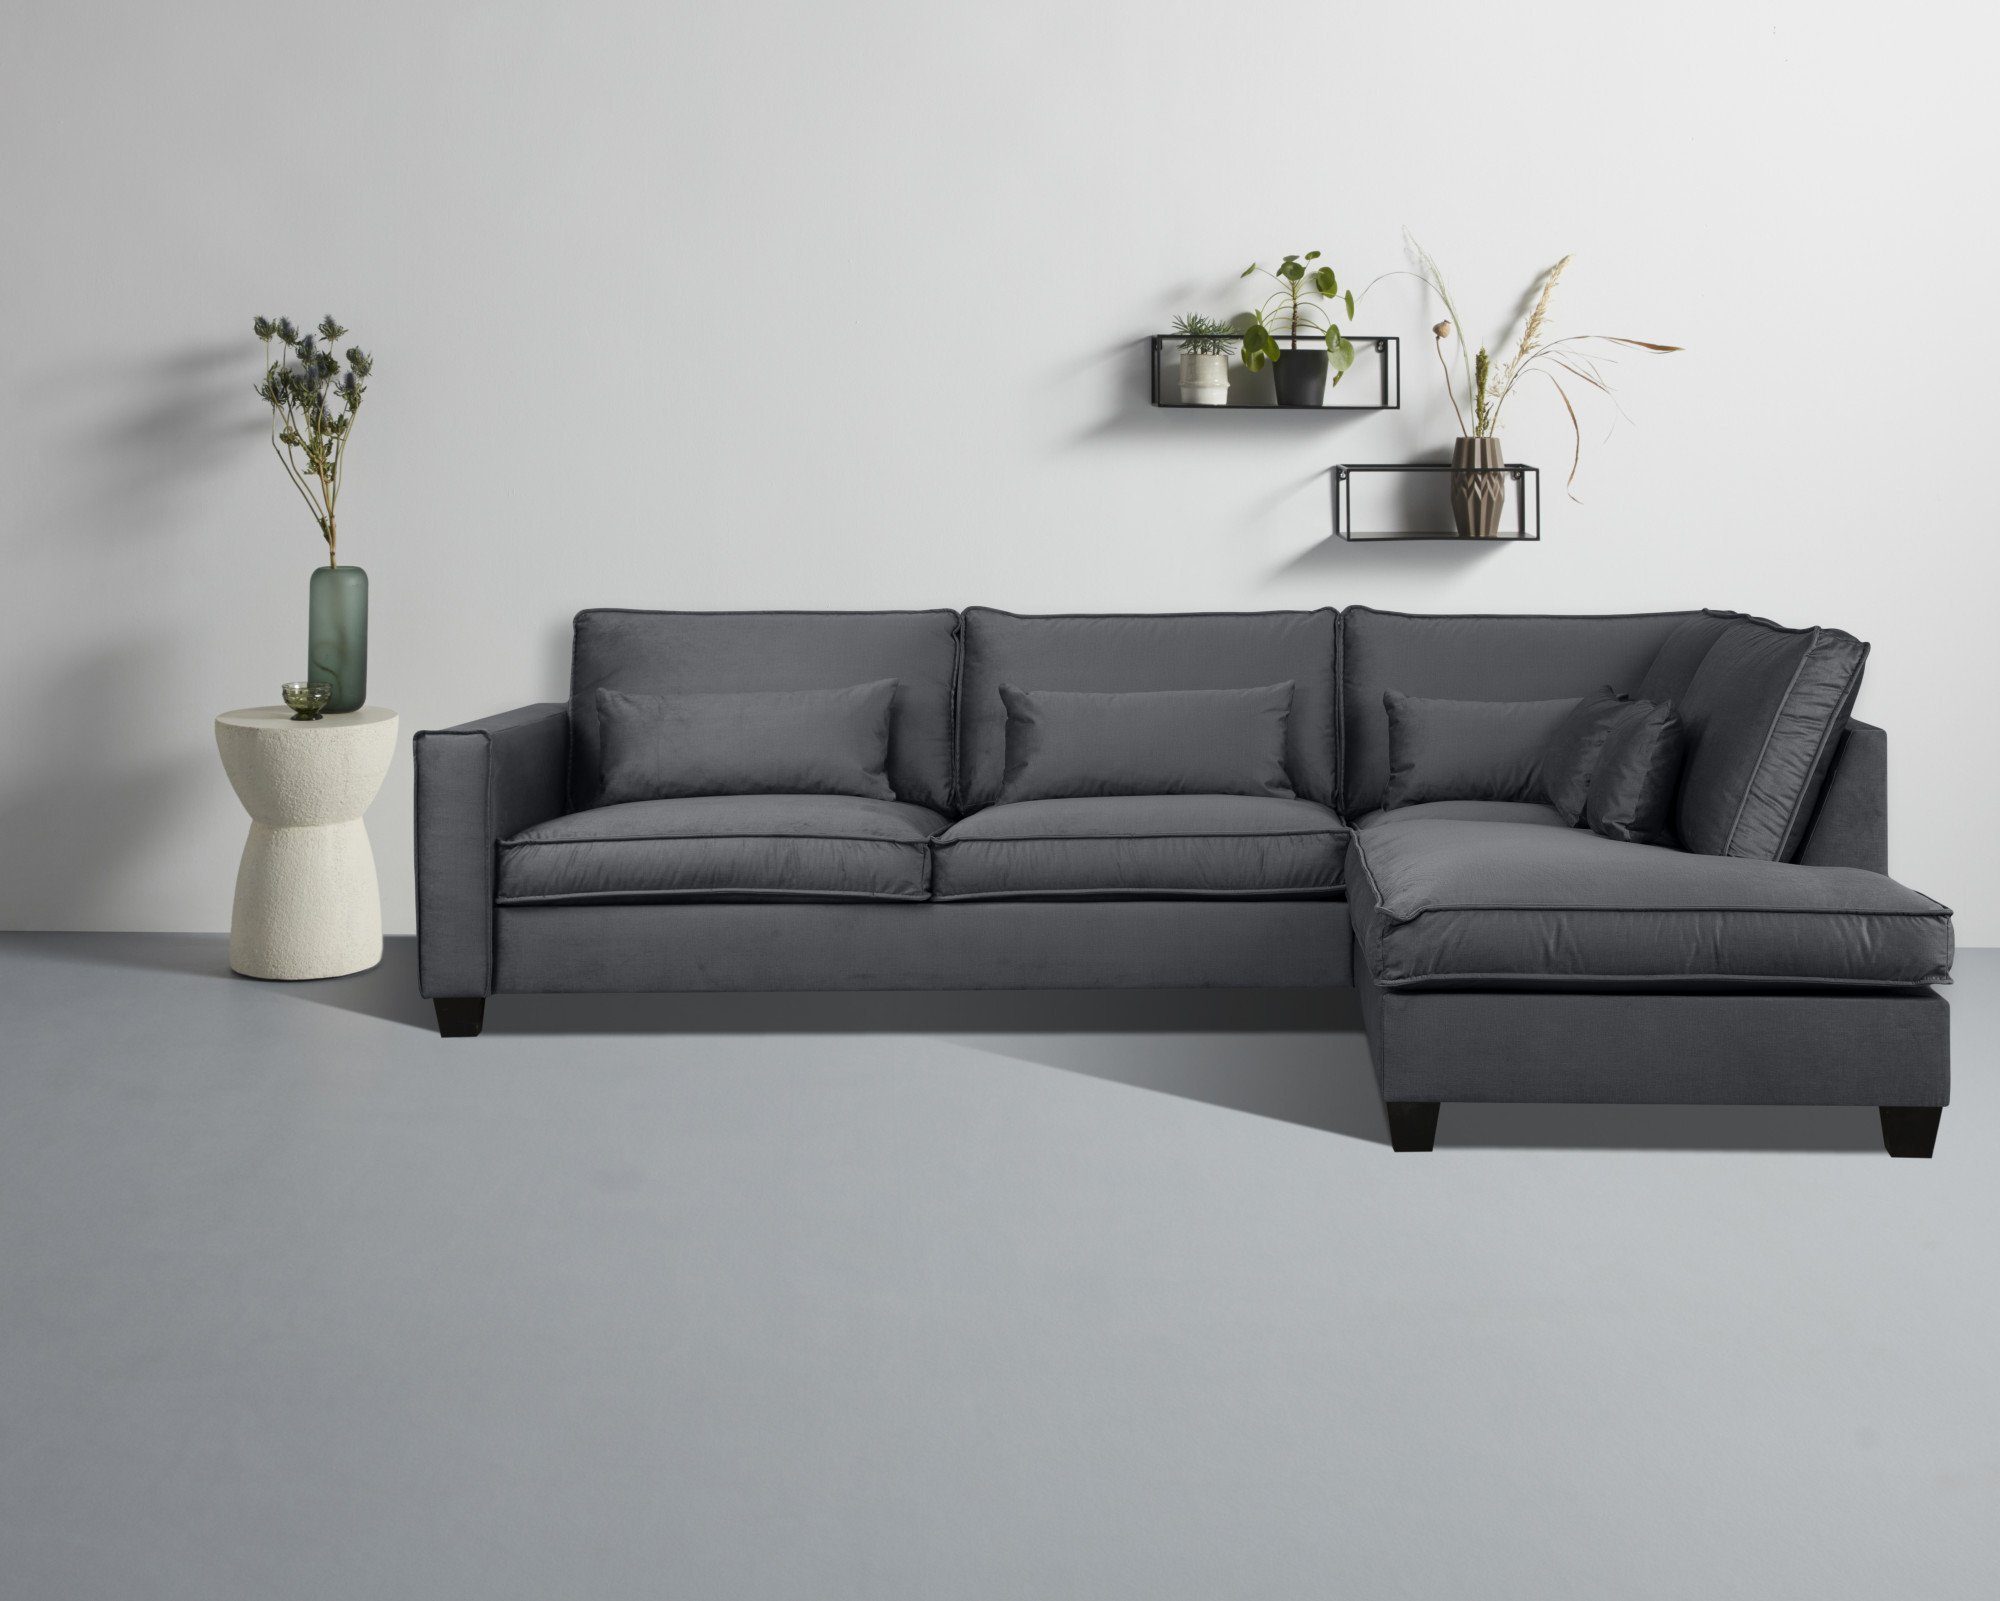 Ecksofa affaire middle gray Farben Home Sitzgelegenheiten, Tilques, verfügbar bequeme viele